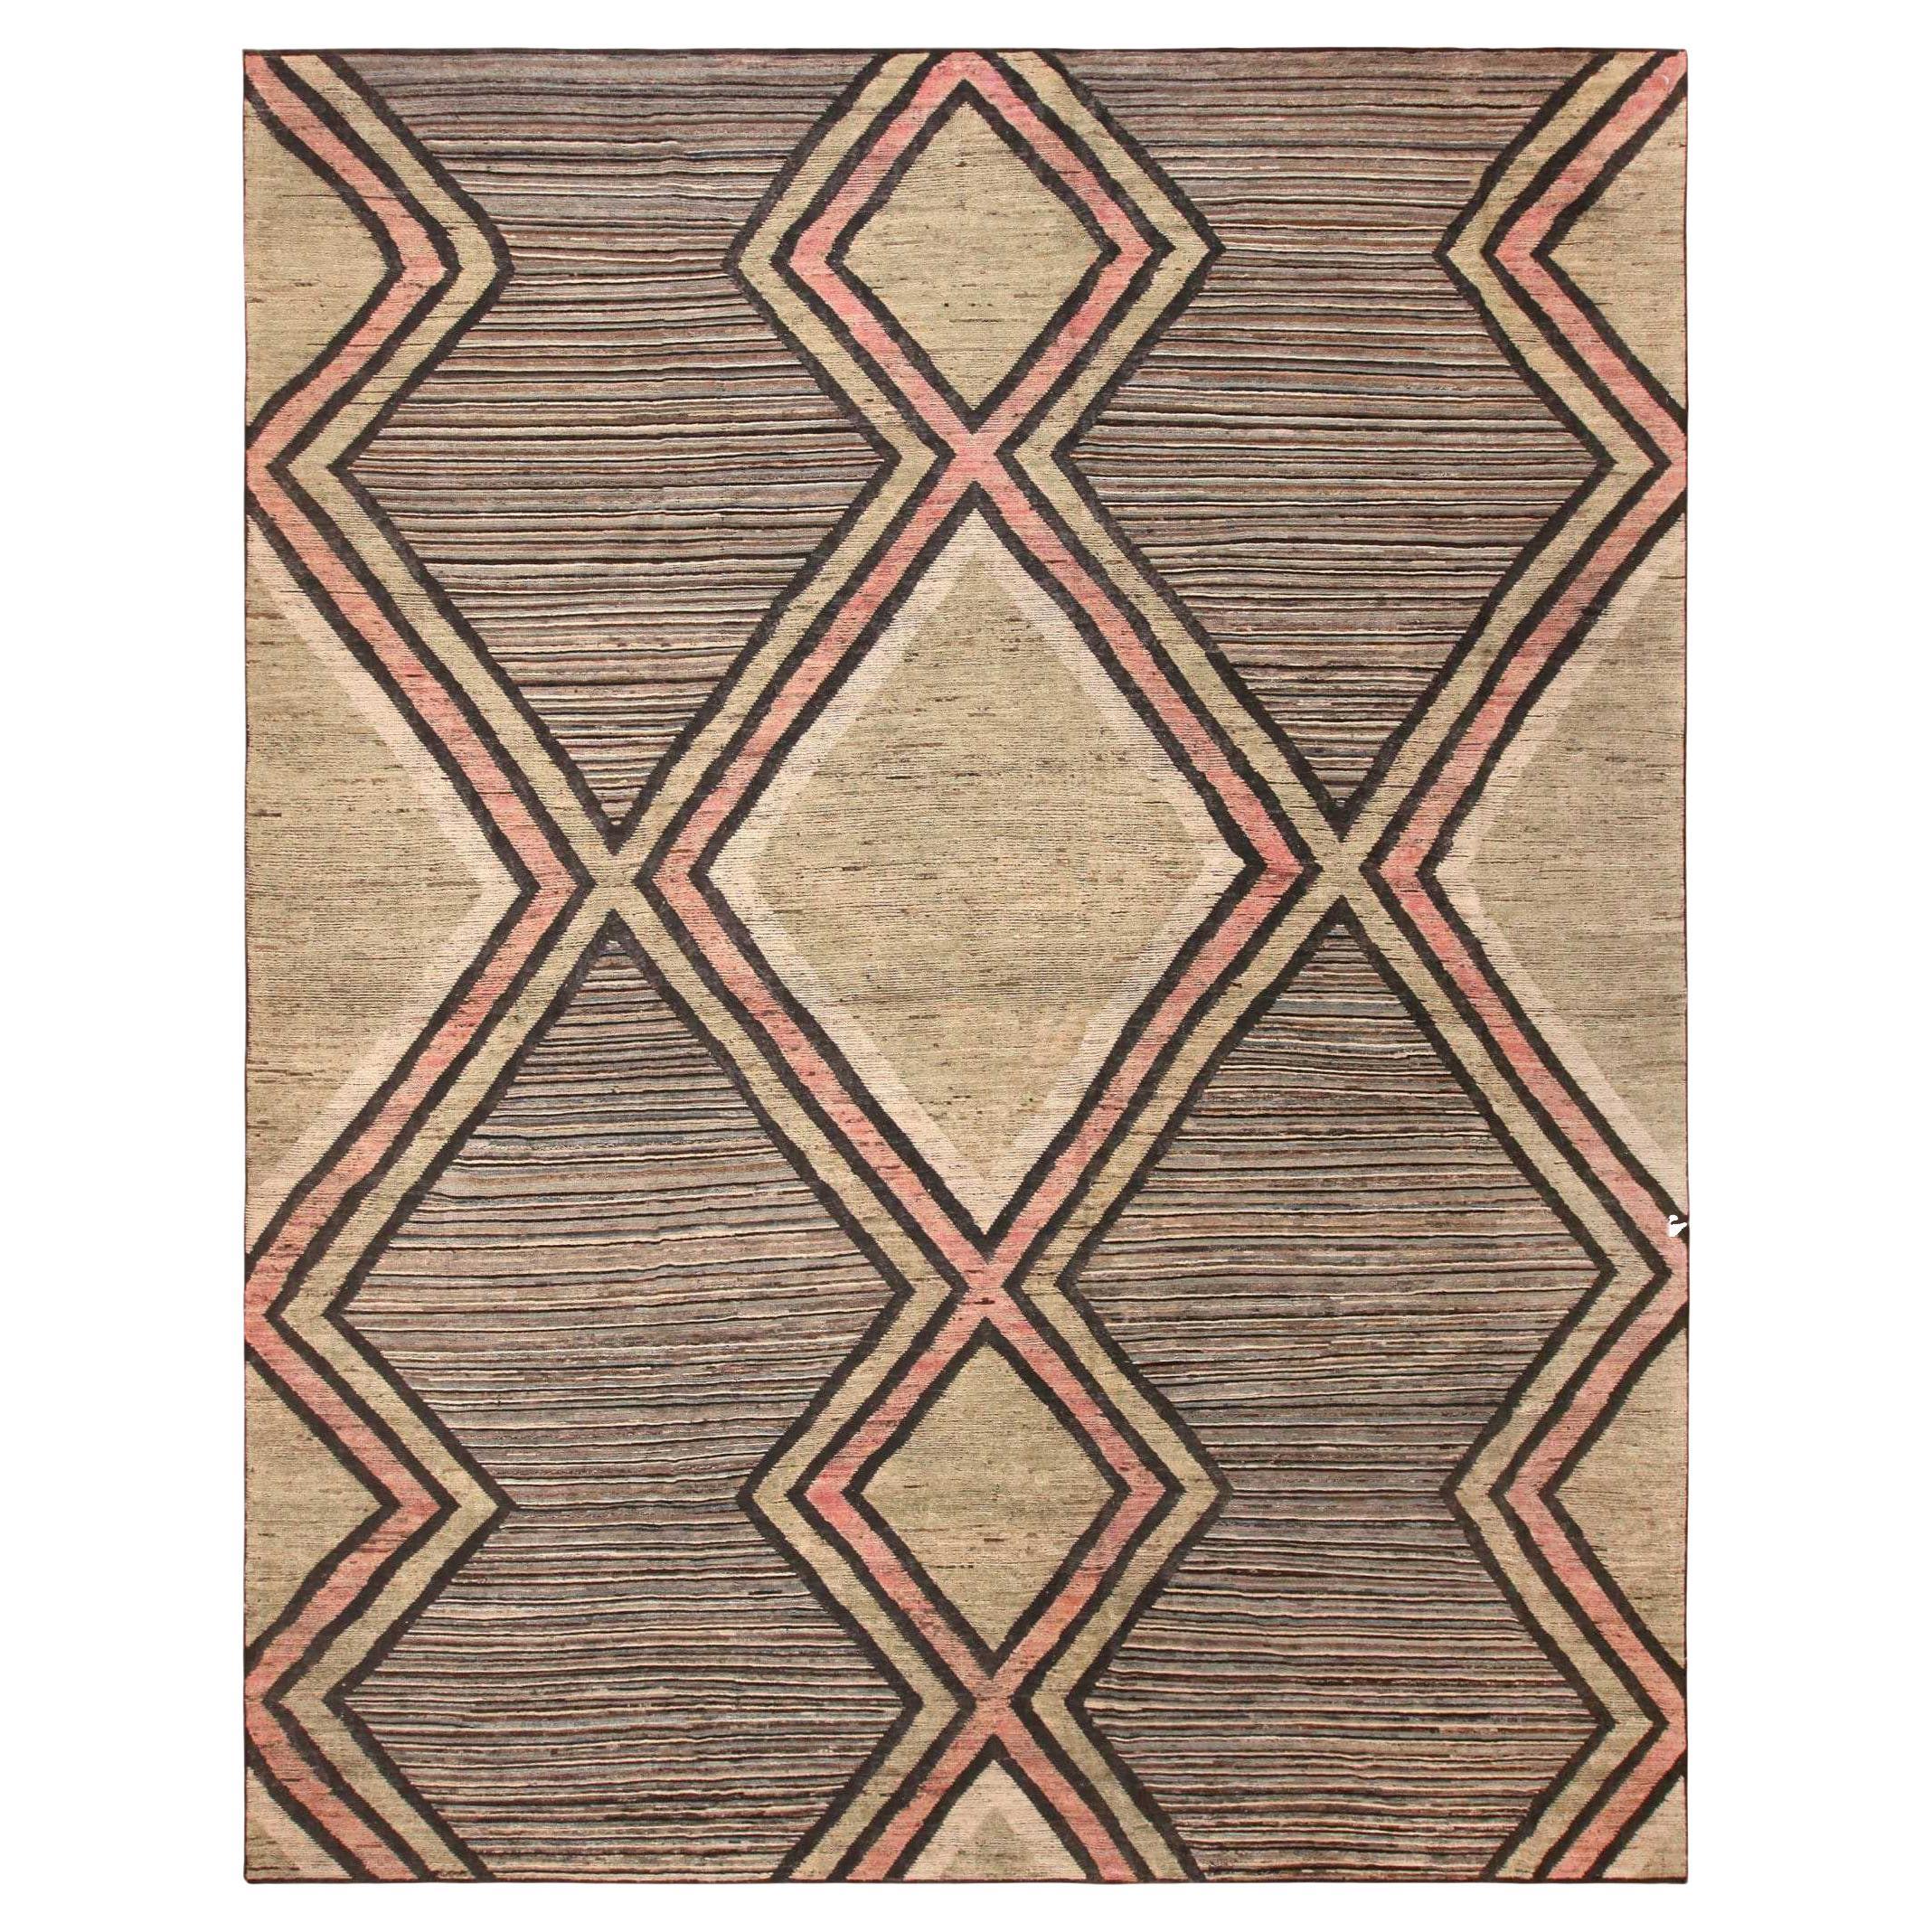 Collection Nazmiyal, grand tapis géométrique moderne accrocheur 12' x 15'3"